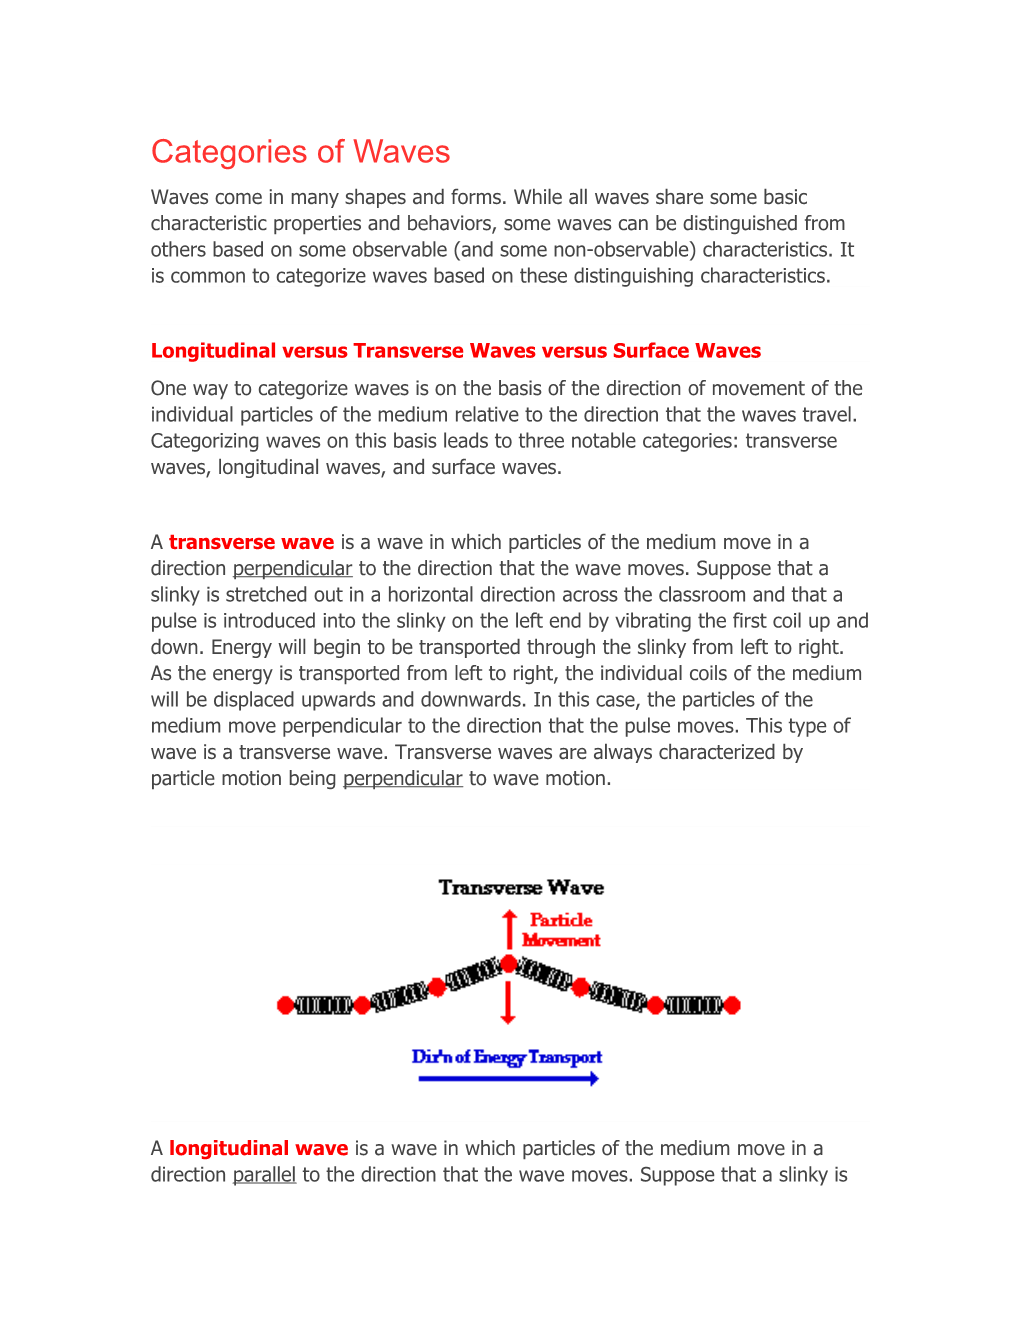 Longitudinal Versus Transverse Waves Versus Surface Waves